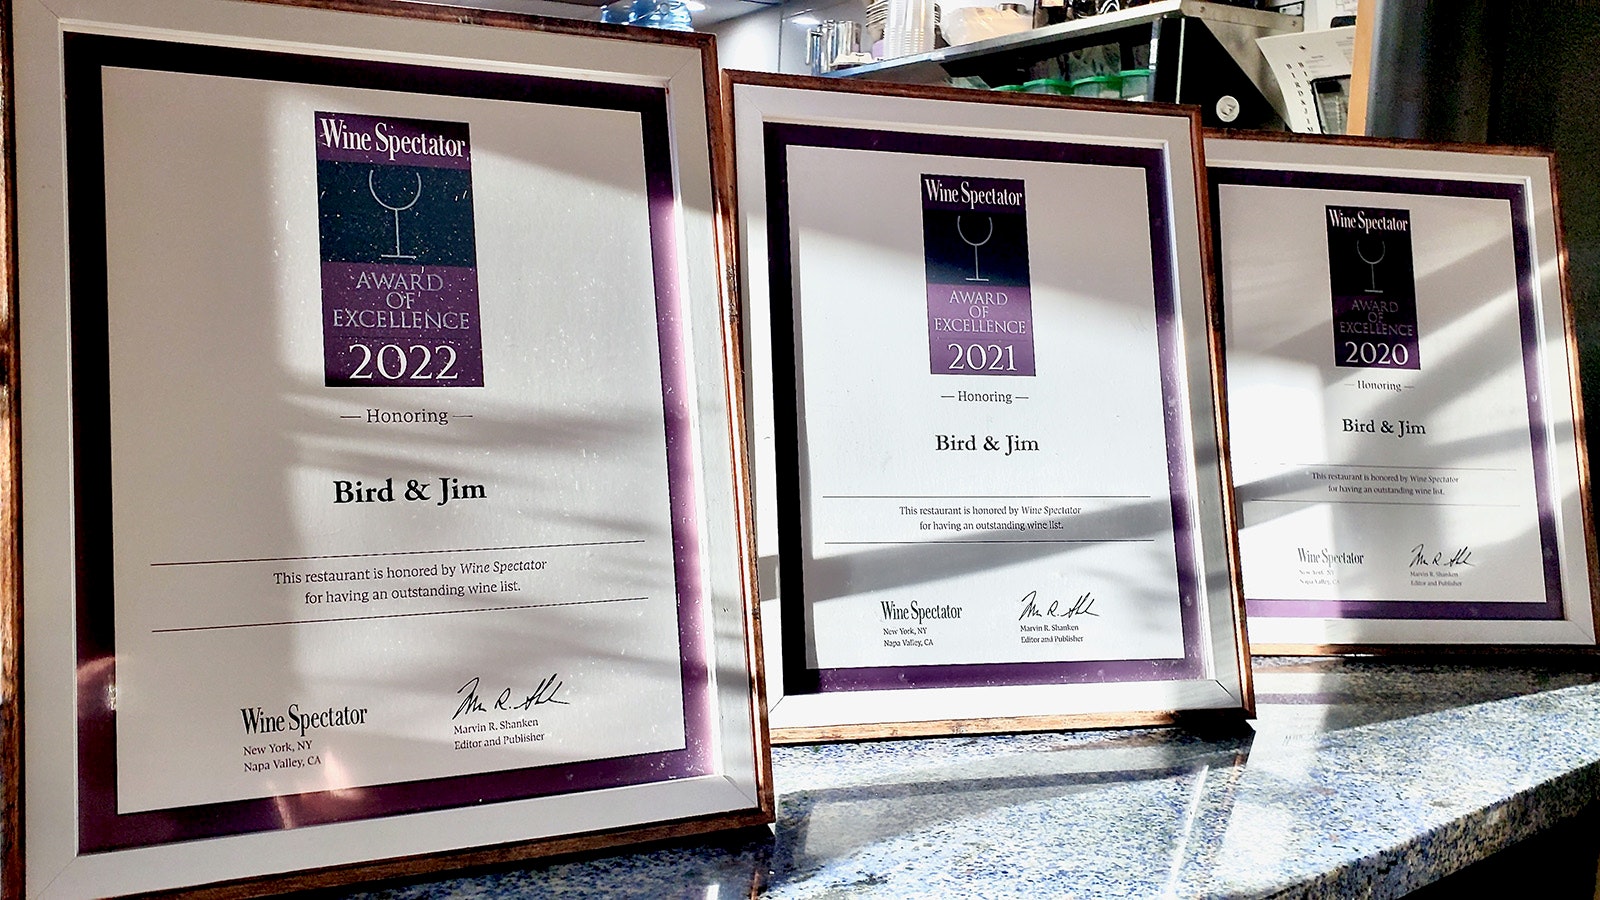 Bird and Jim restaurant has won prestigious awards for its wine list.